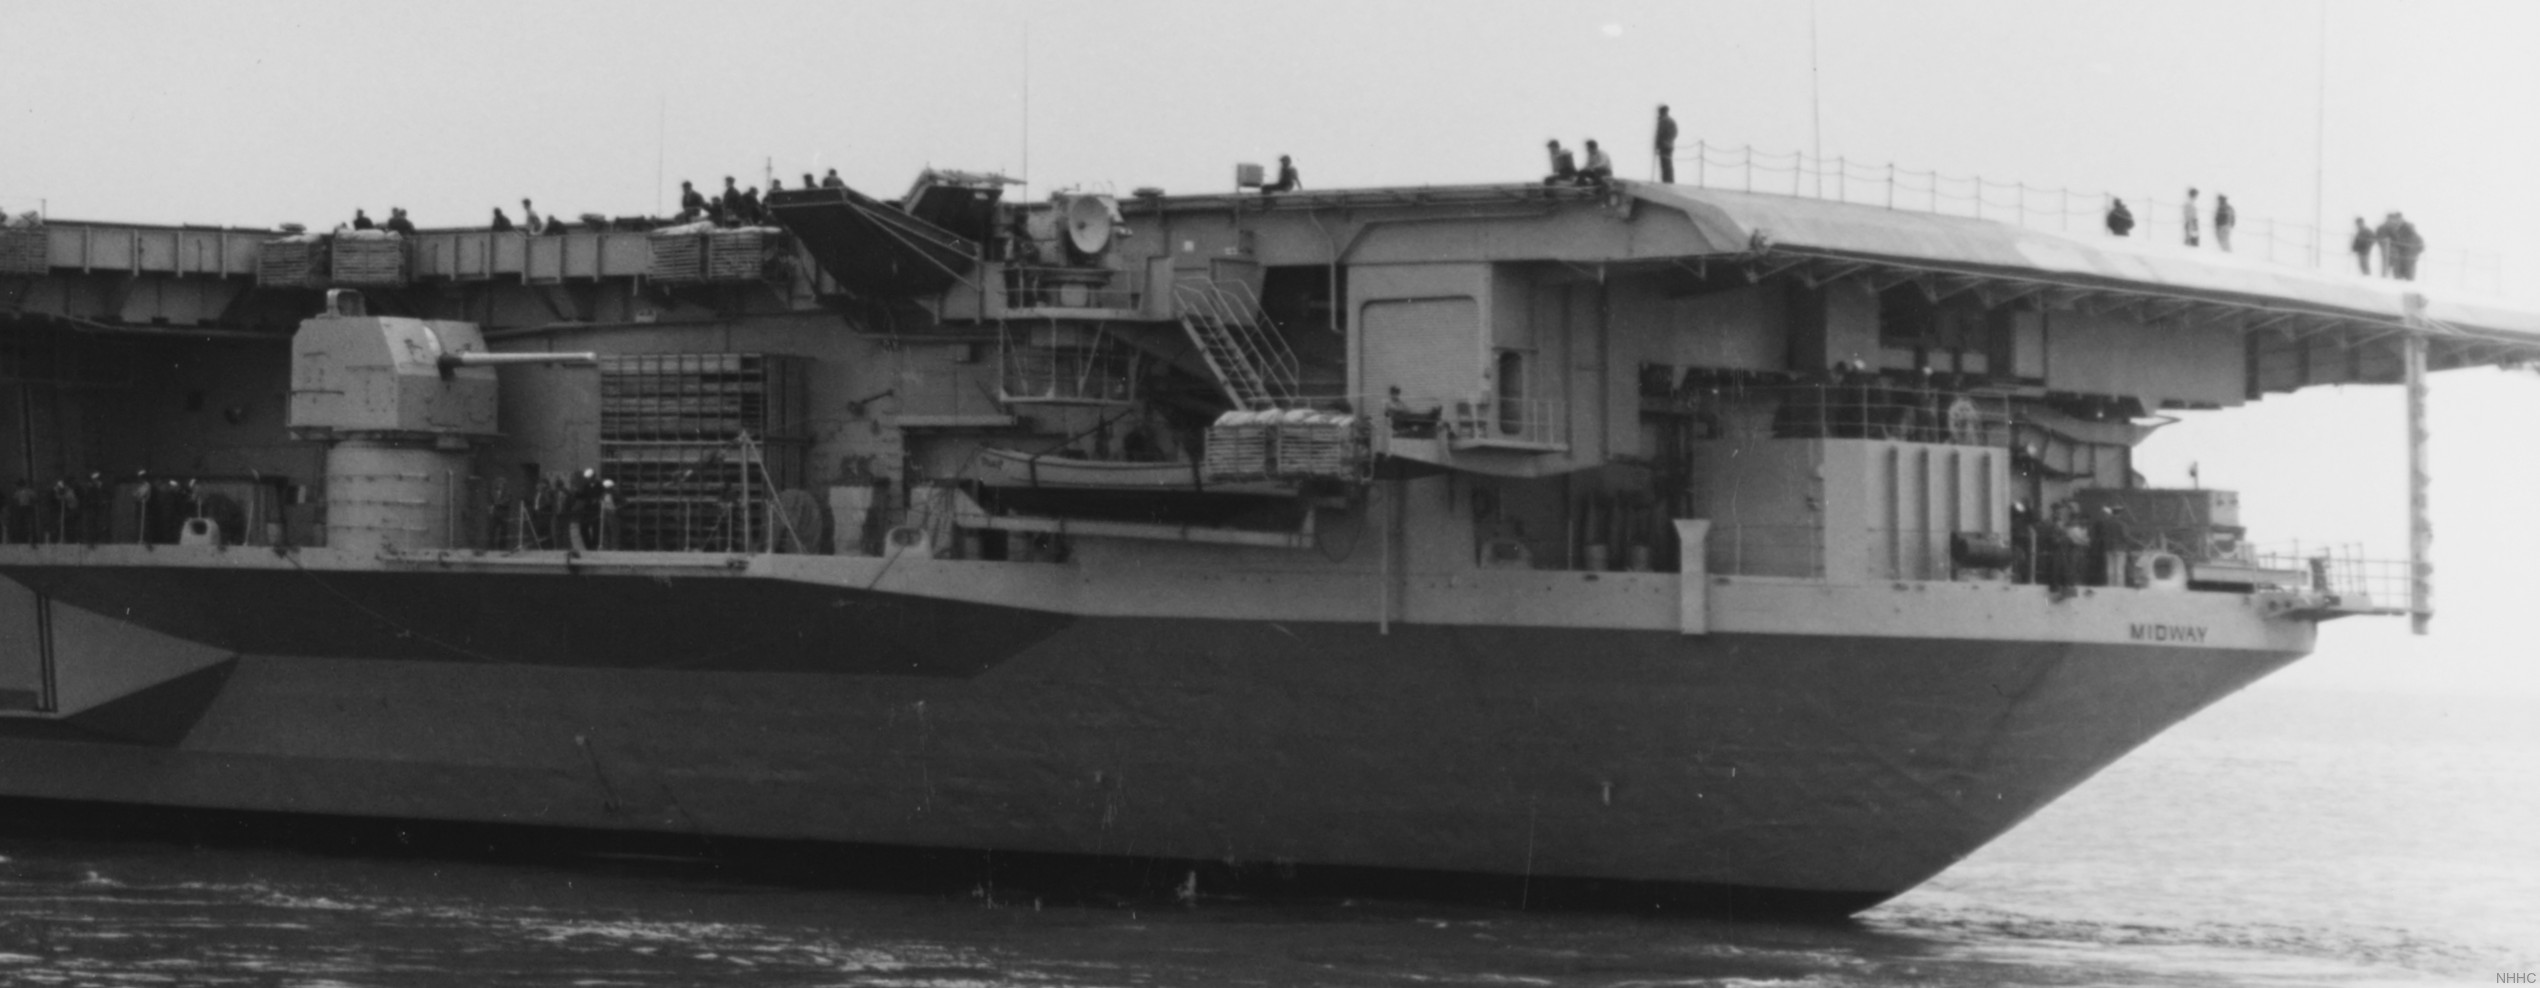 cva-41 uss midway aircraft carrier scb-110 modification conversion san francisco naval shipyard 108